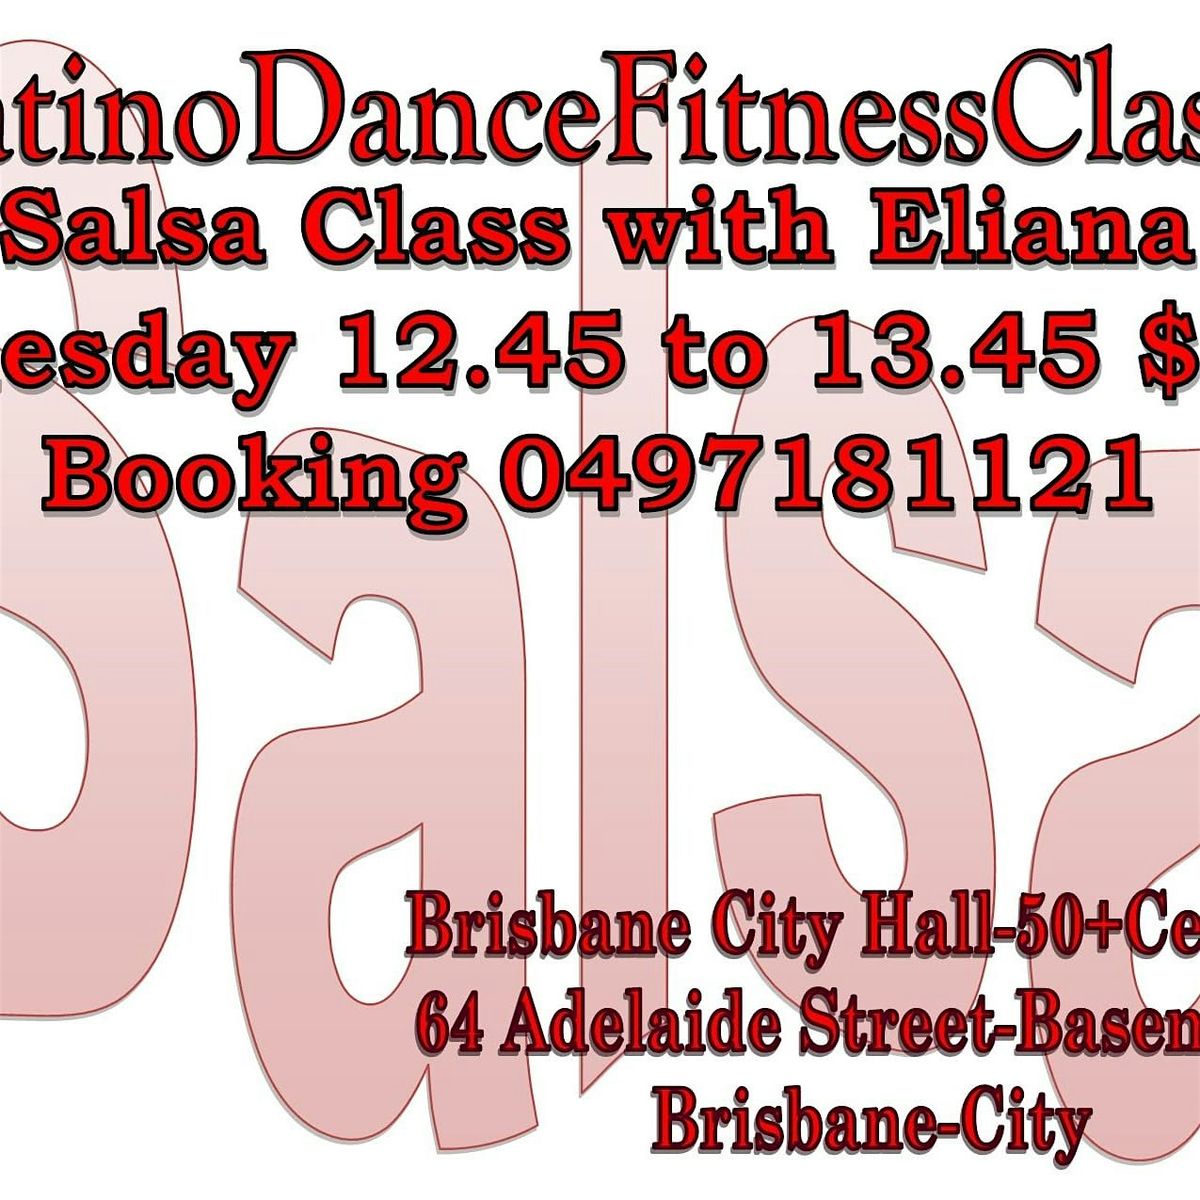 Salsa Class Tuesday At Brisbane City Hall Basement With Eliana